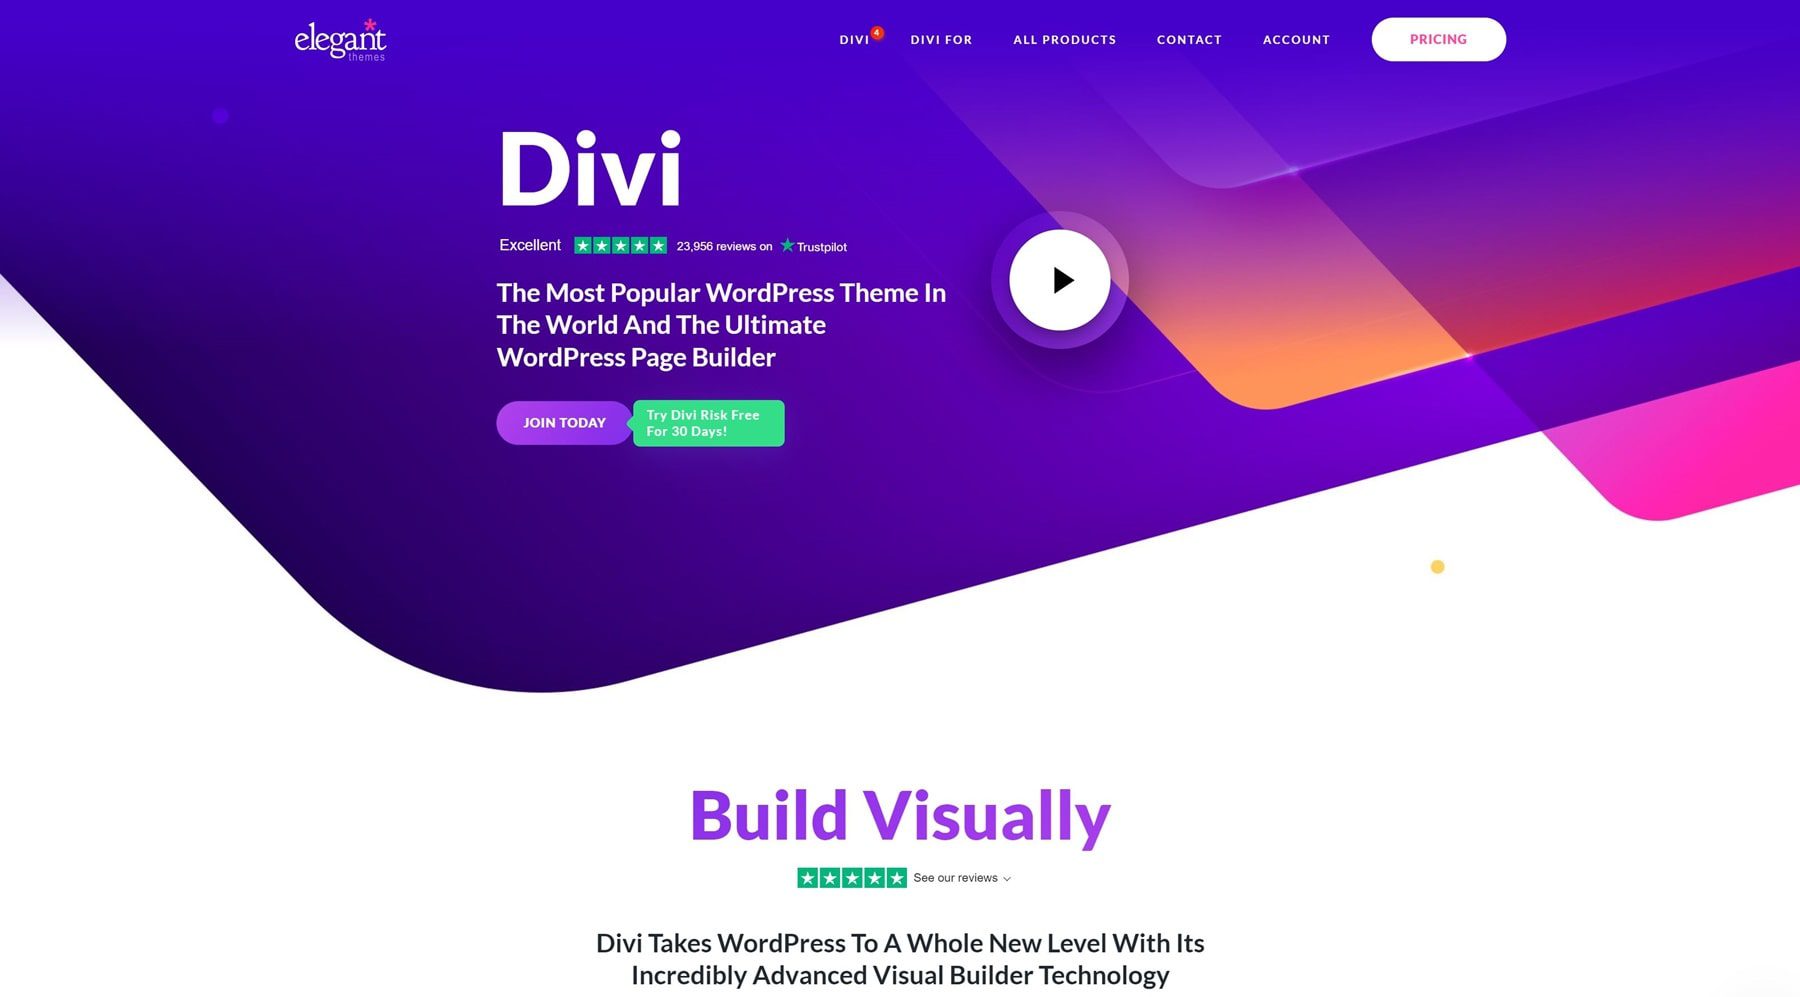 divi product landing page image